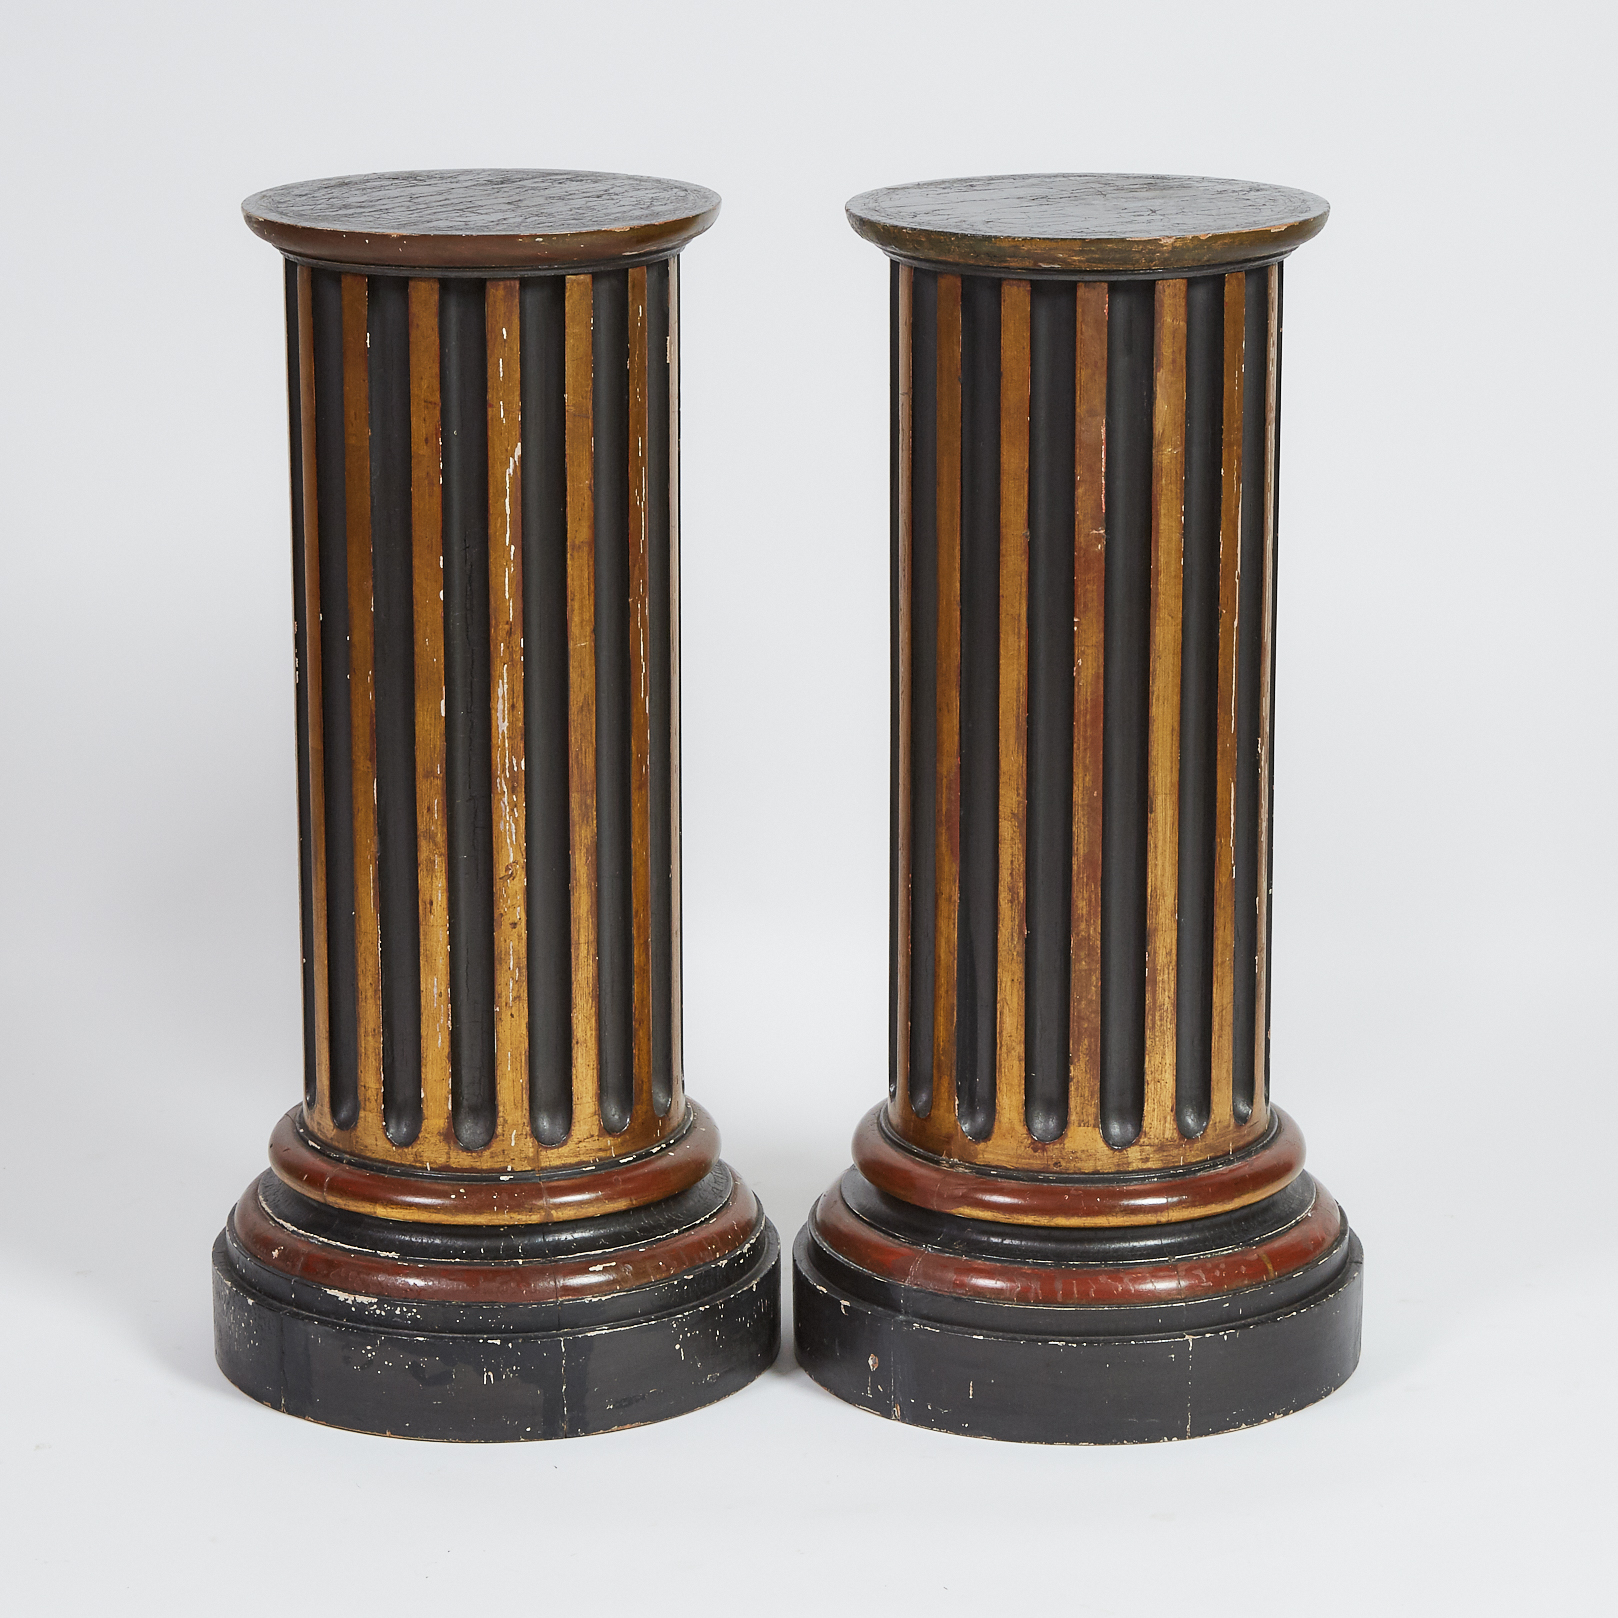 Pair of Parcel Gilt and Ebonized Fluted Column Form Pedestals, c.1900